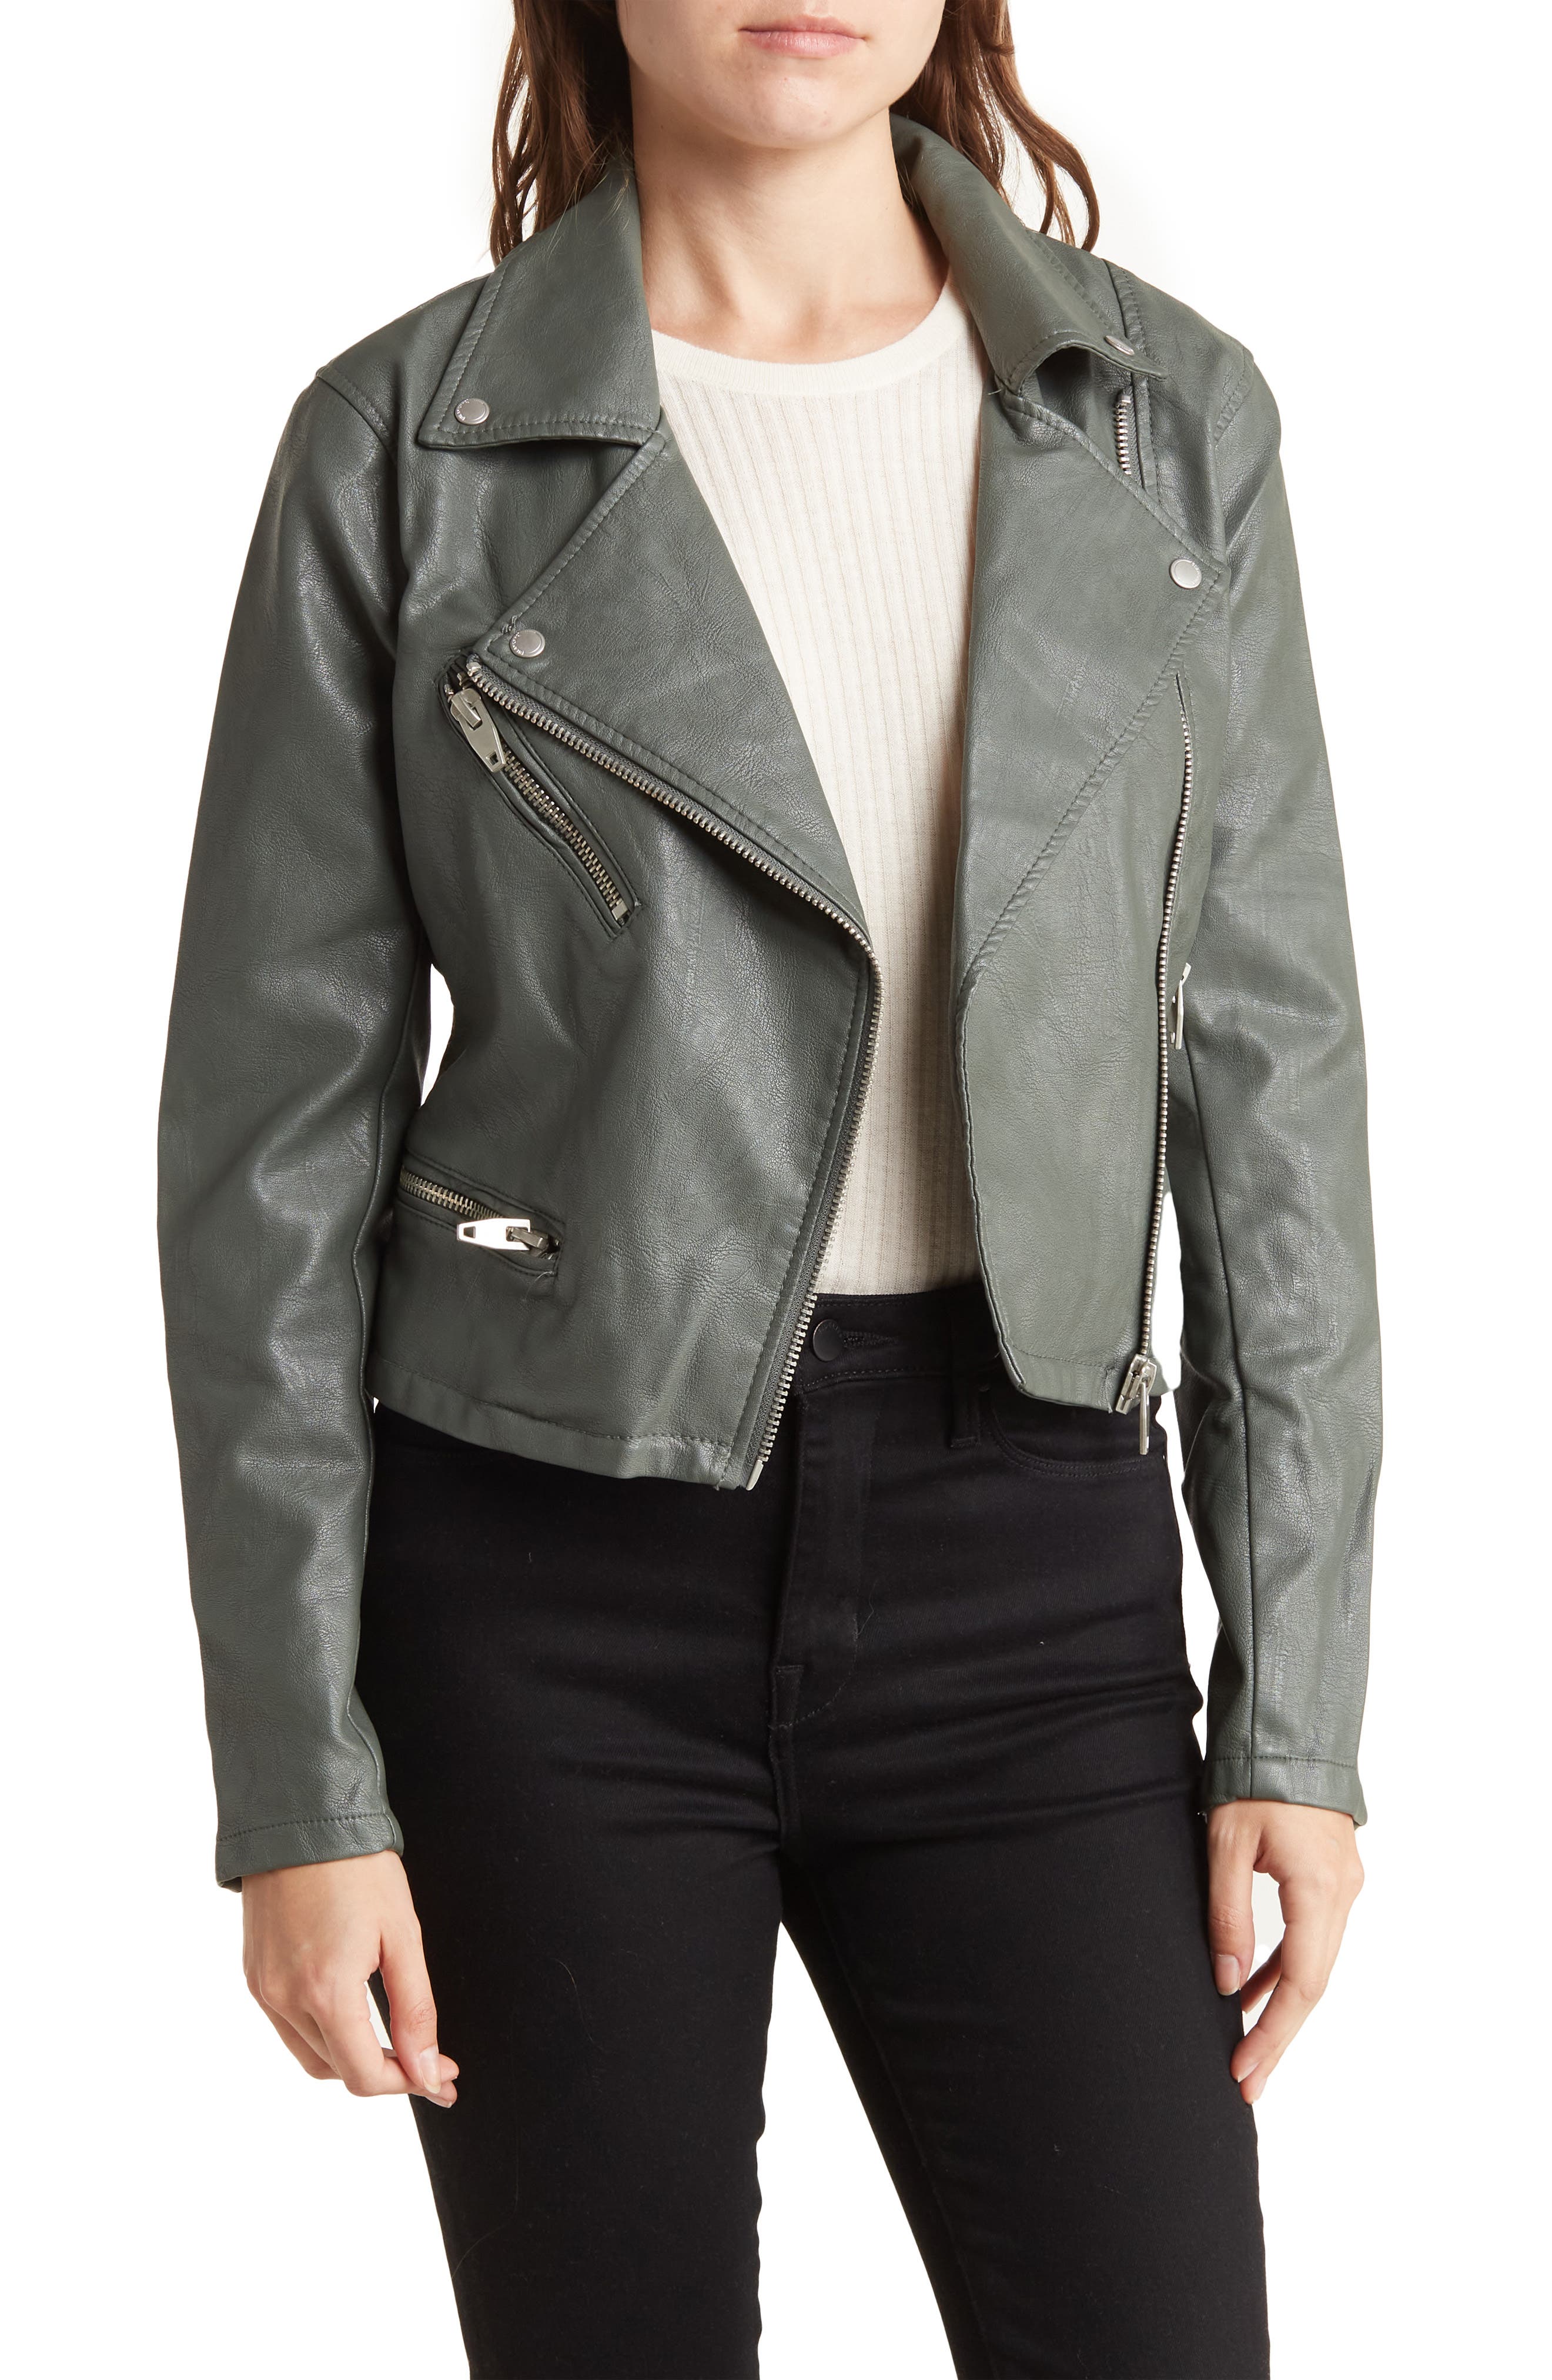 Black S Sfera jacket discount 68% WOMEN FASHION Jackets Casual 